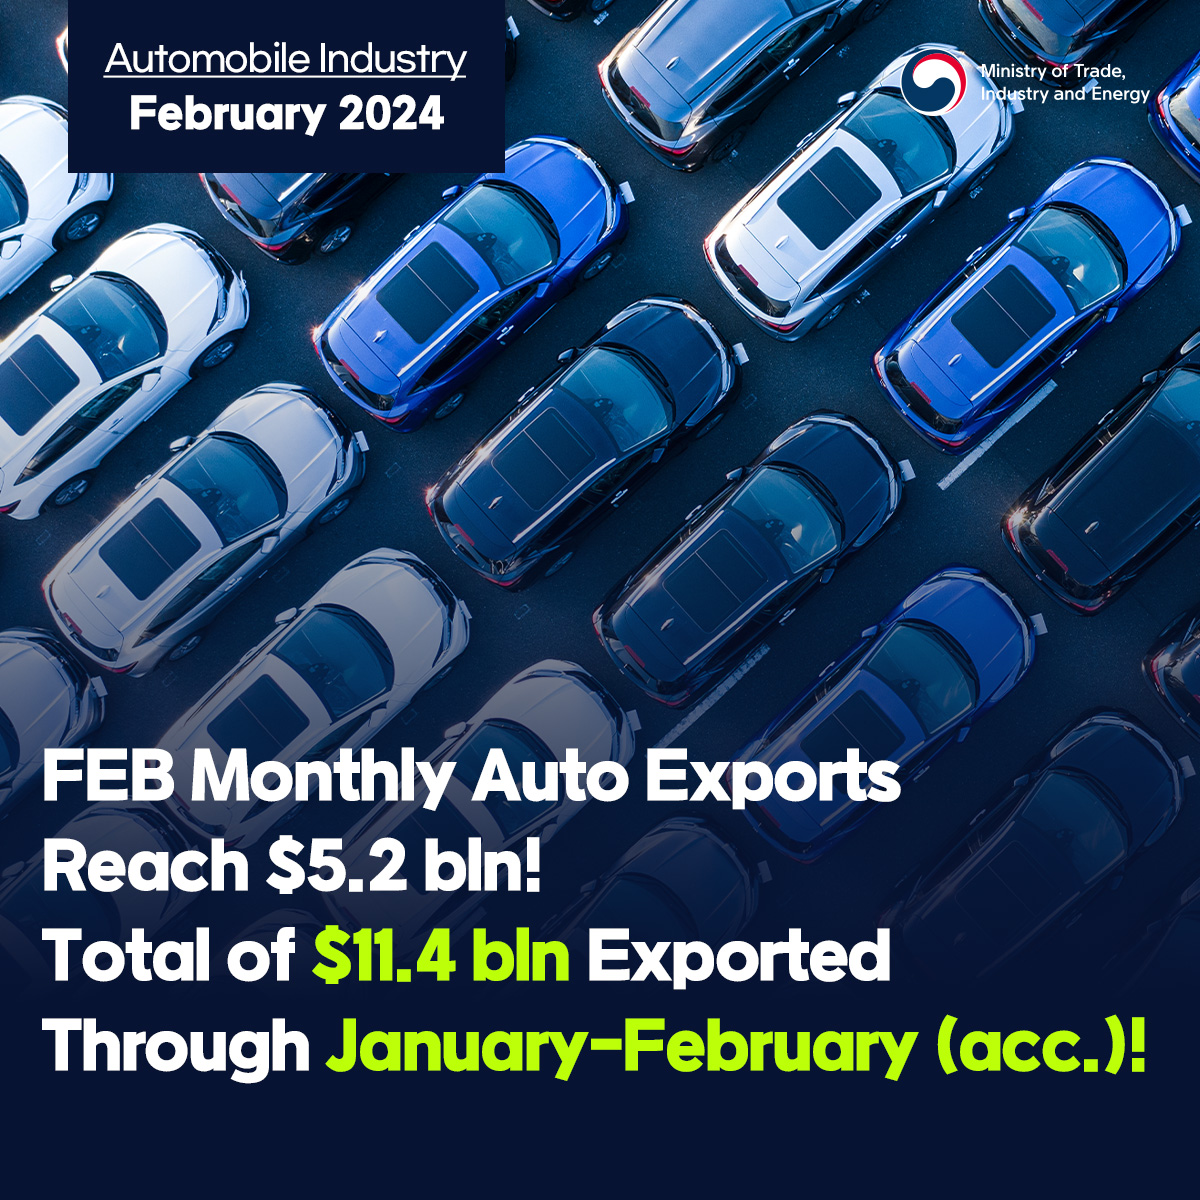 Korea's auto industry exports $11.4 bln through Jan-Feb in 2024!